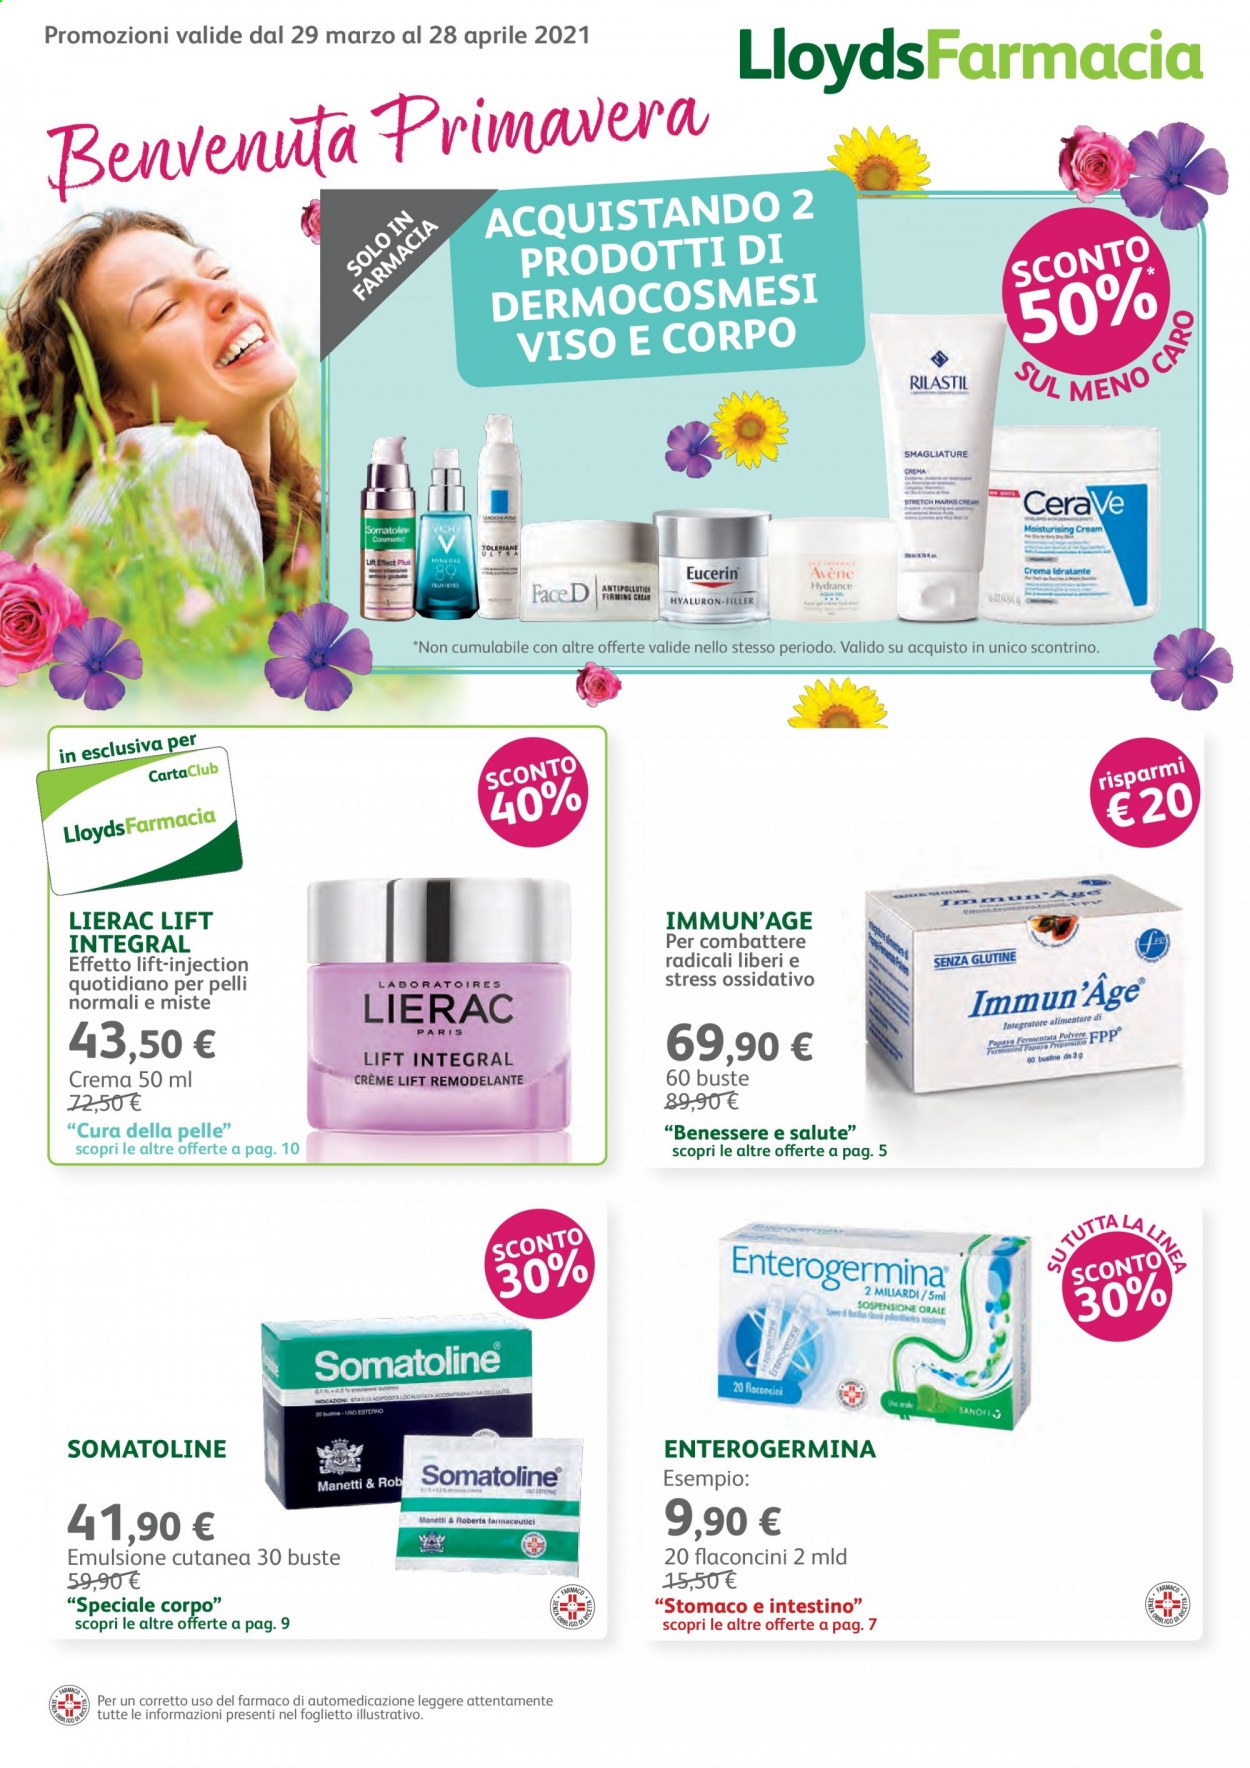 thumbnail - Volantino Lloyds Farmacia - 29/3/2021 - 28/4/2021 - Prodotti in offerta - Lierac, Enterogermina. Pagina 1.